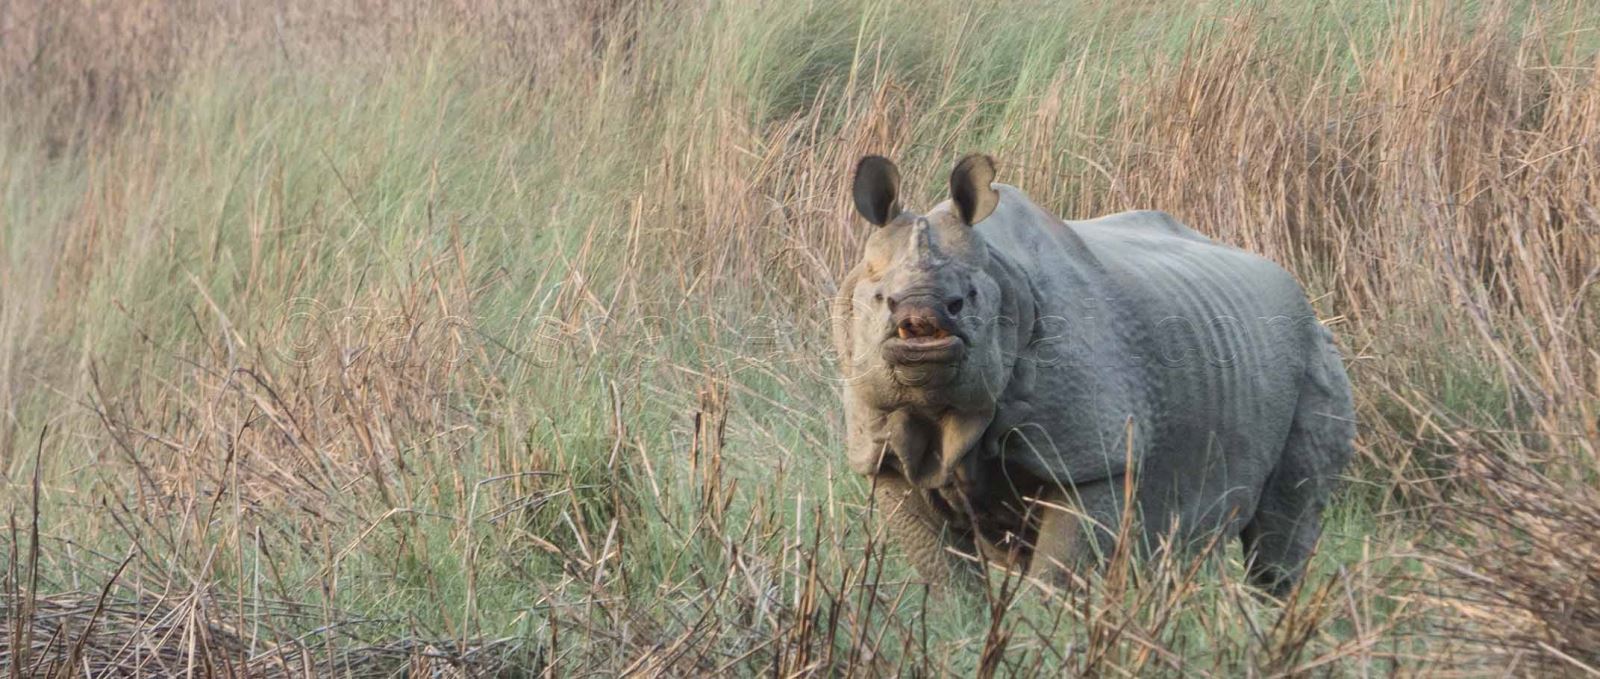 One Horned Rhino at Bardiya National Park